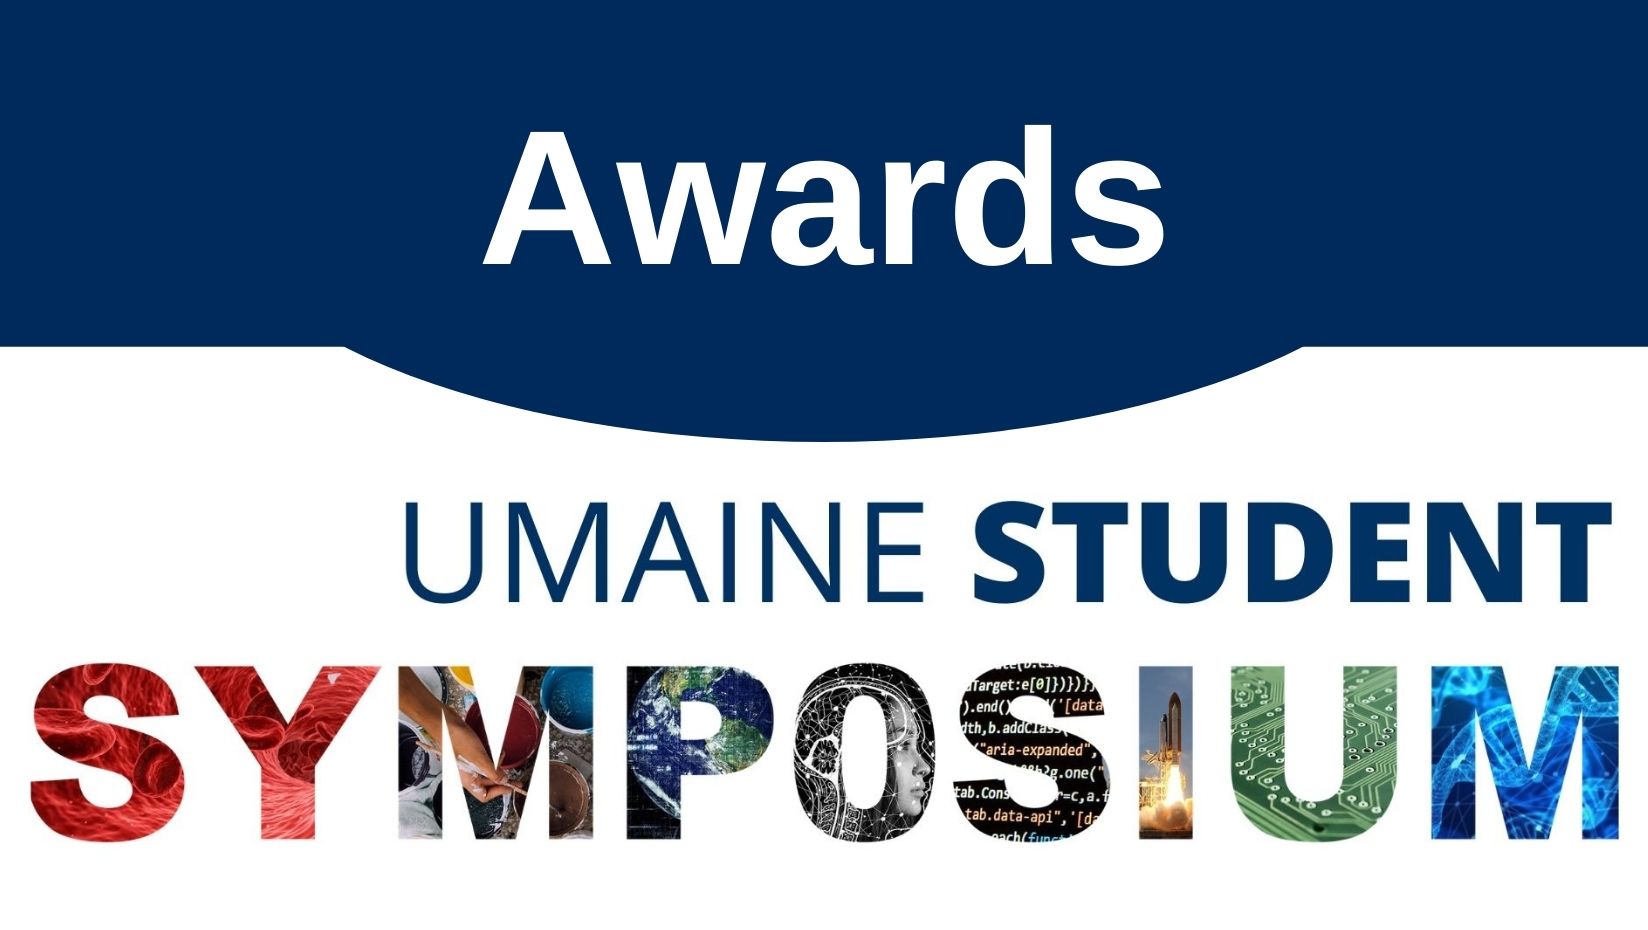 Awards from the UMaine Student Symposium